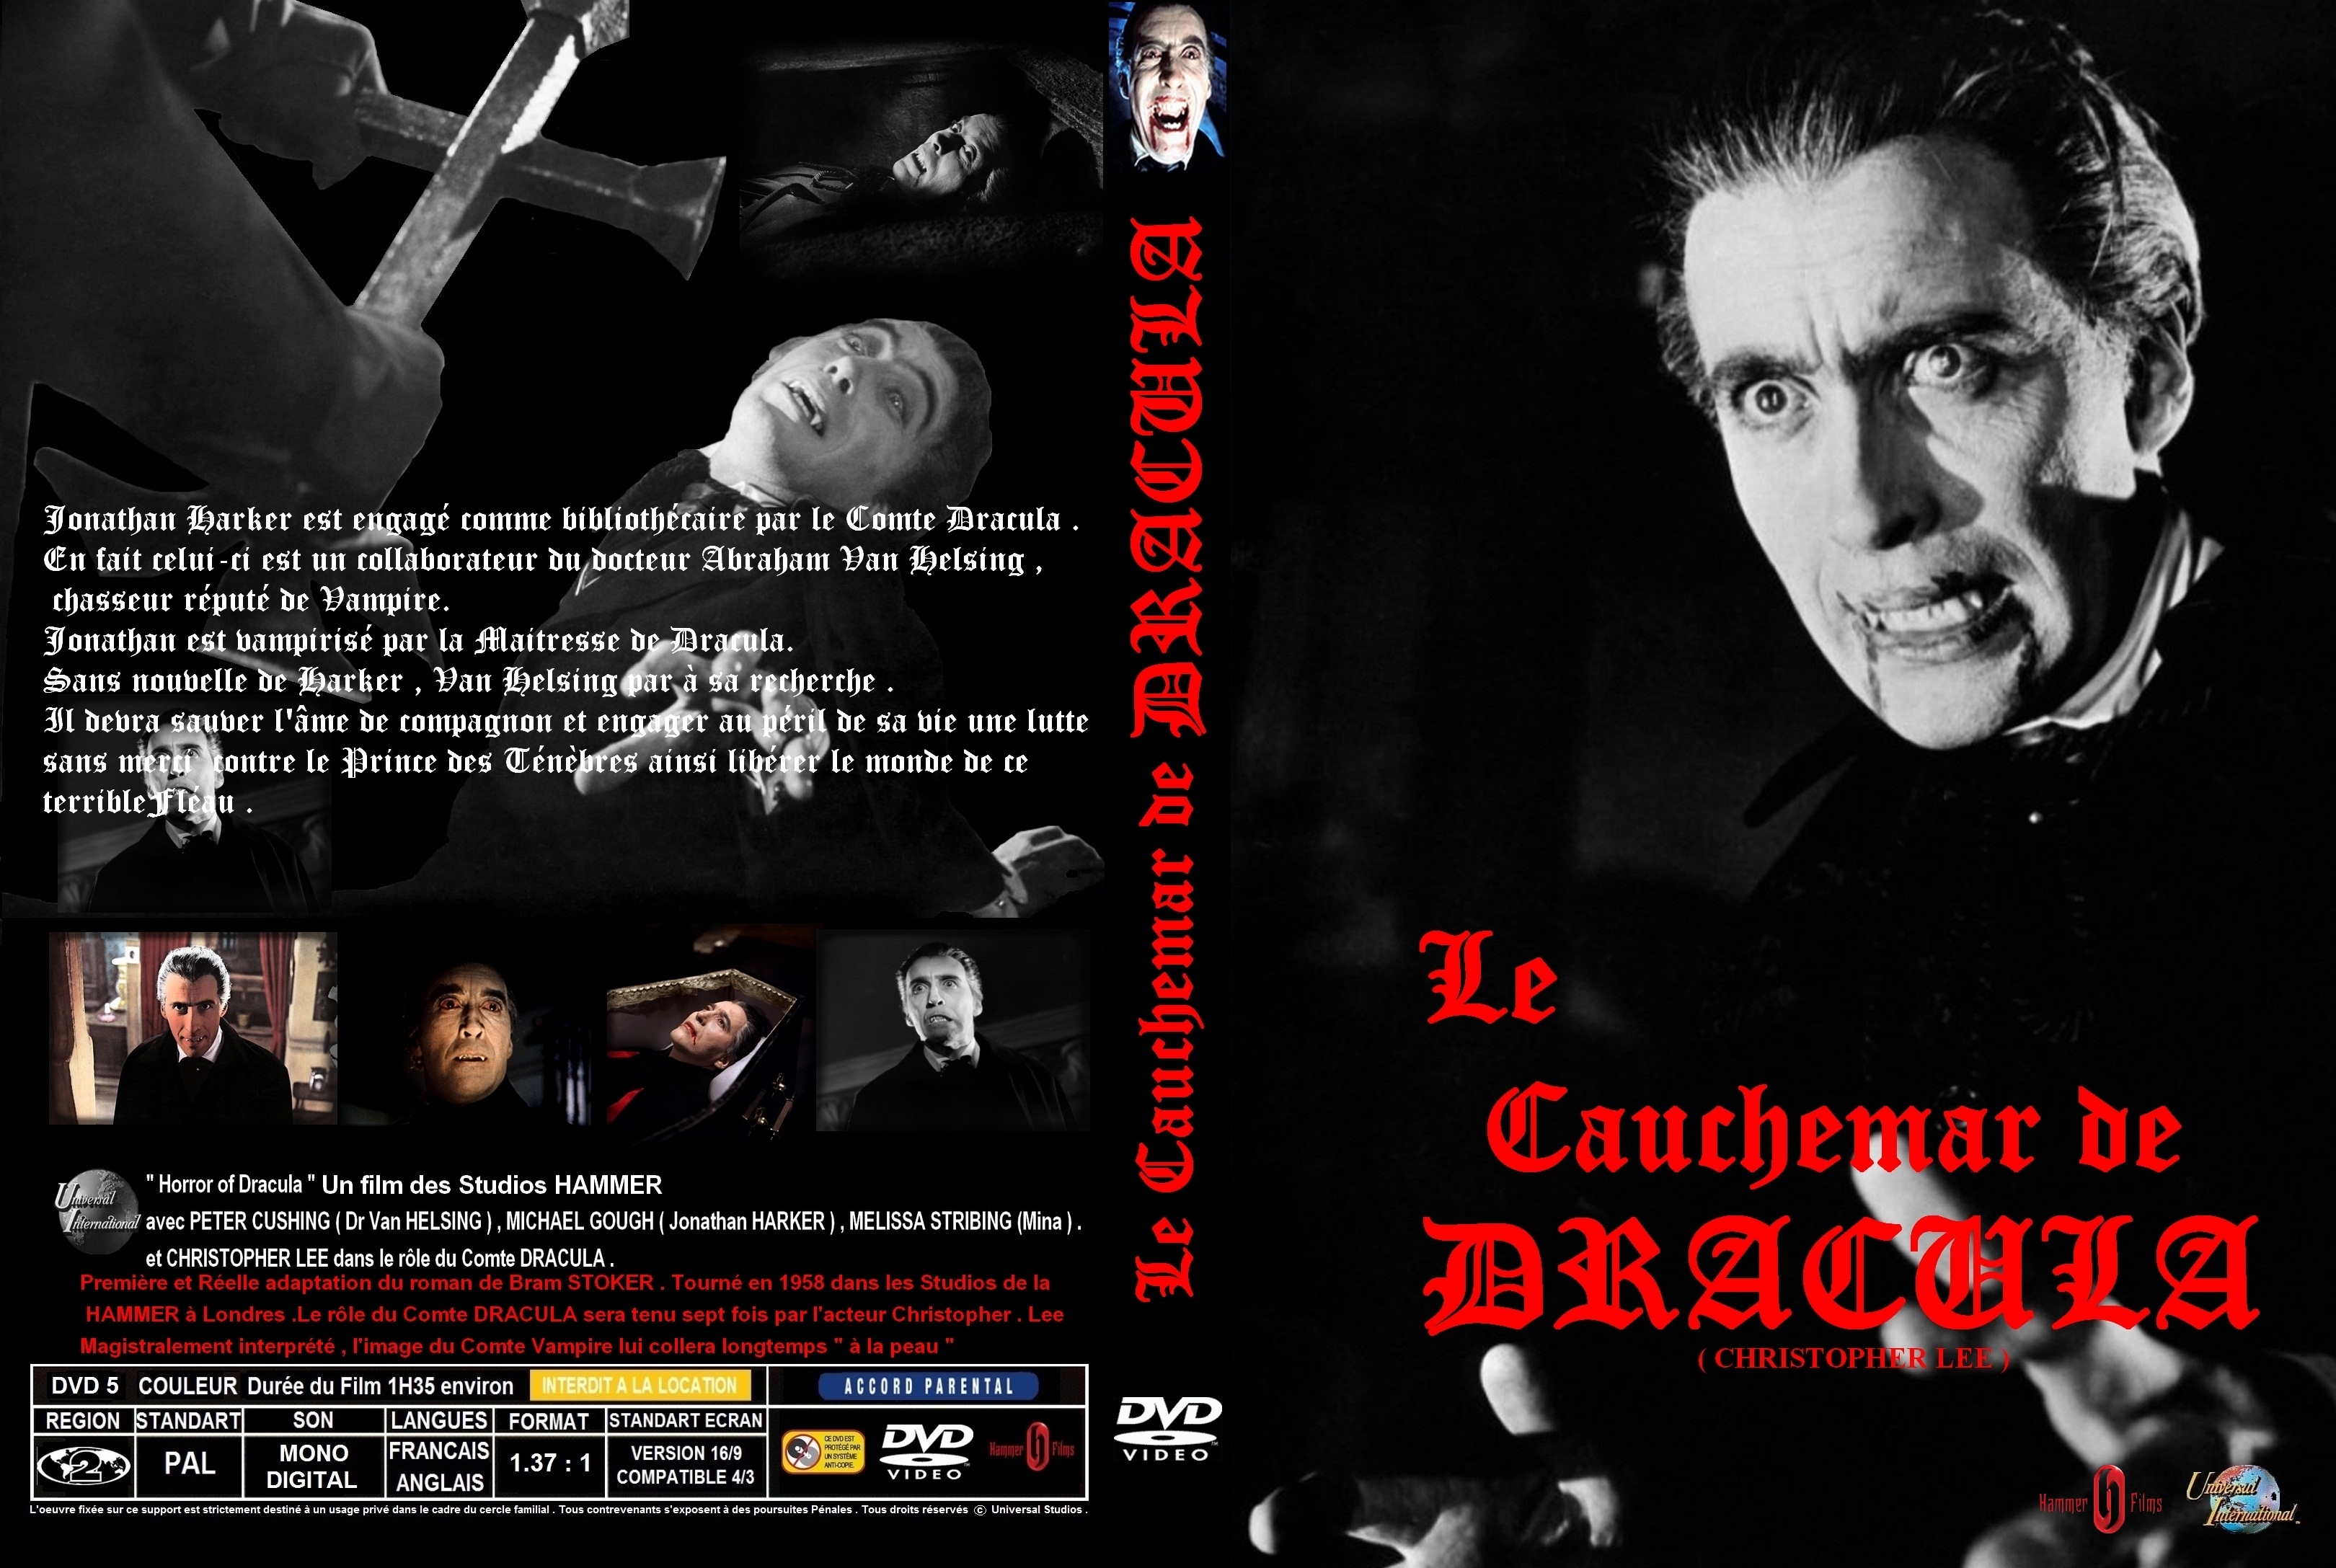 Jaquette DVD Le cauchemar de Dracula custom